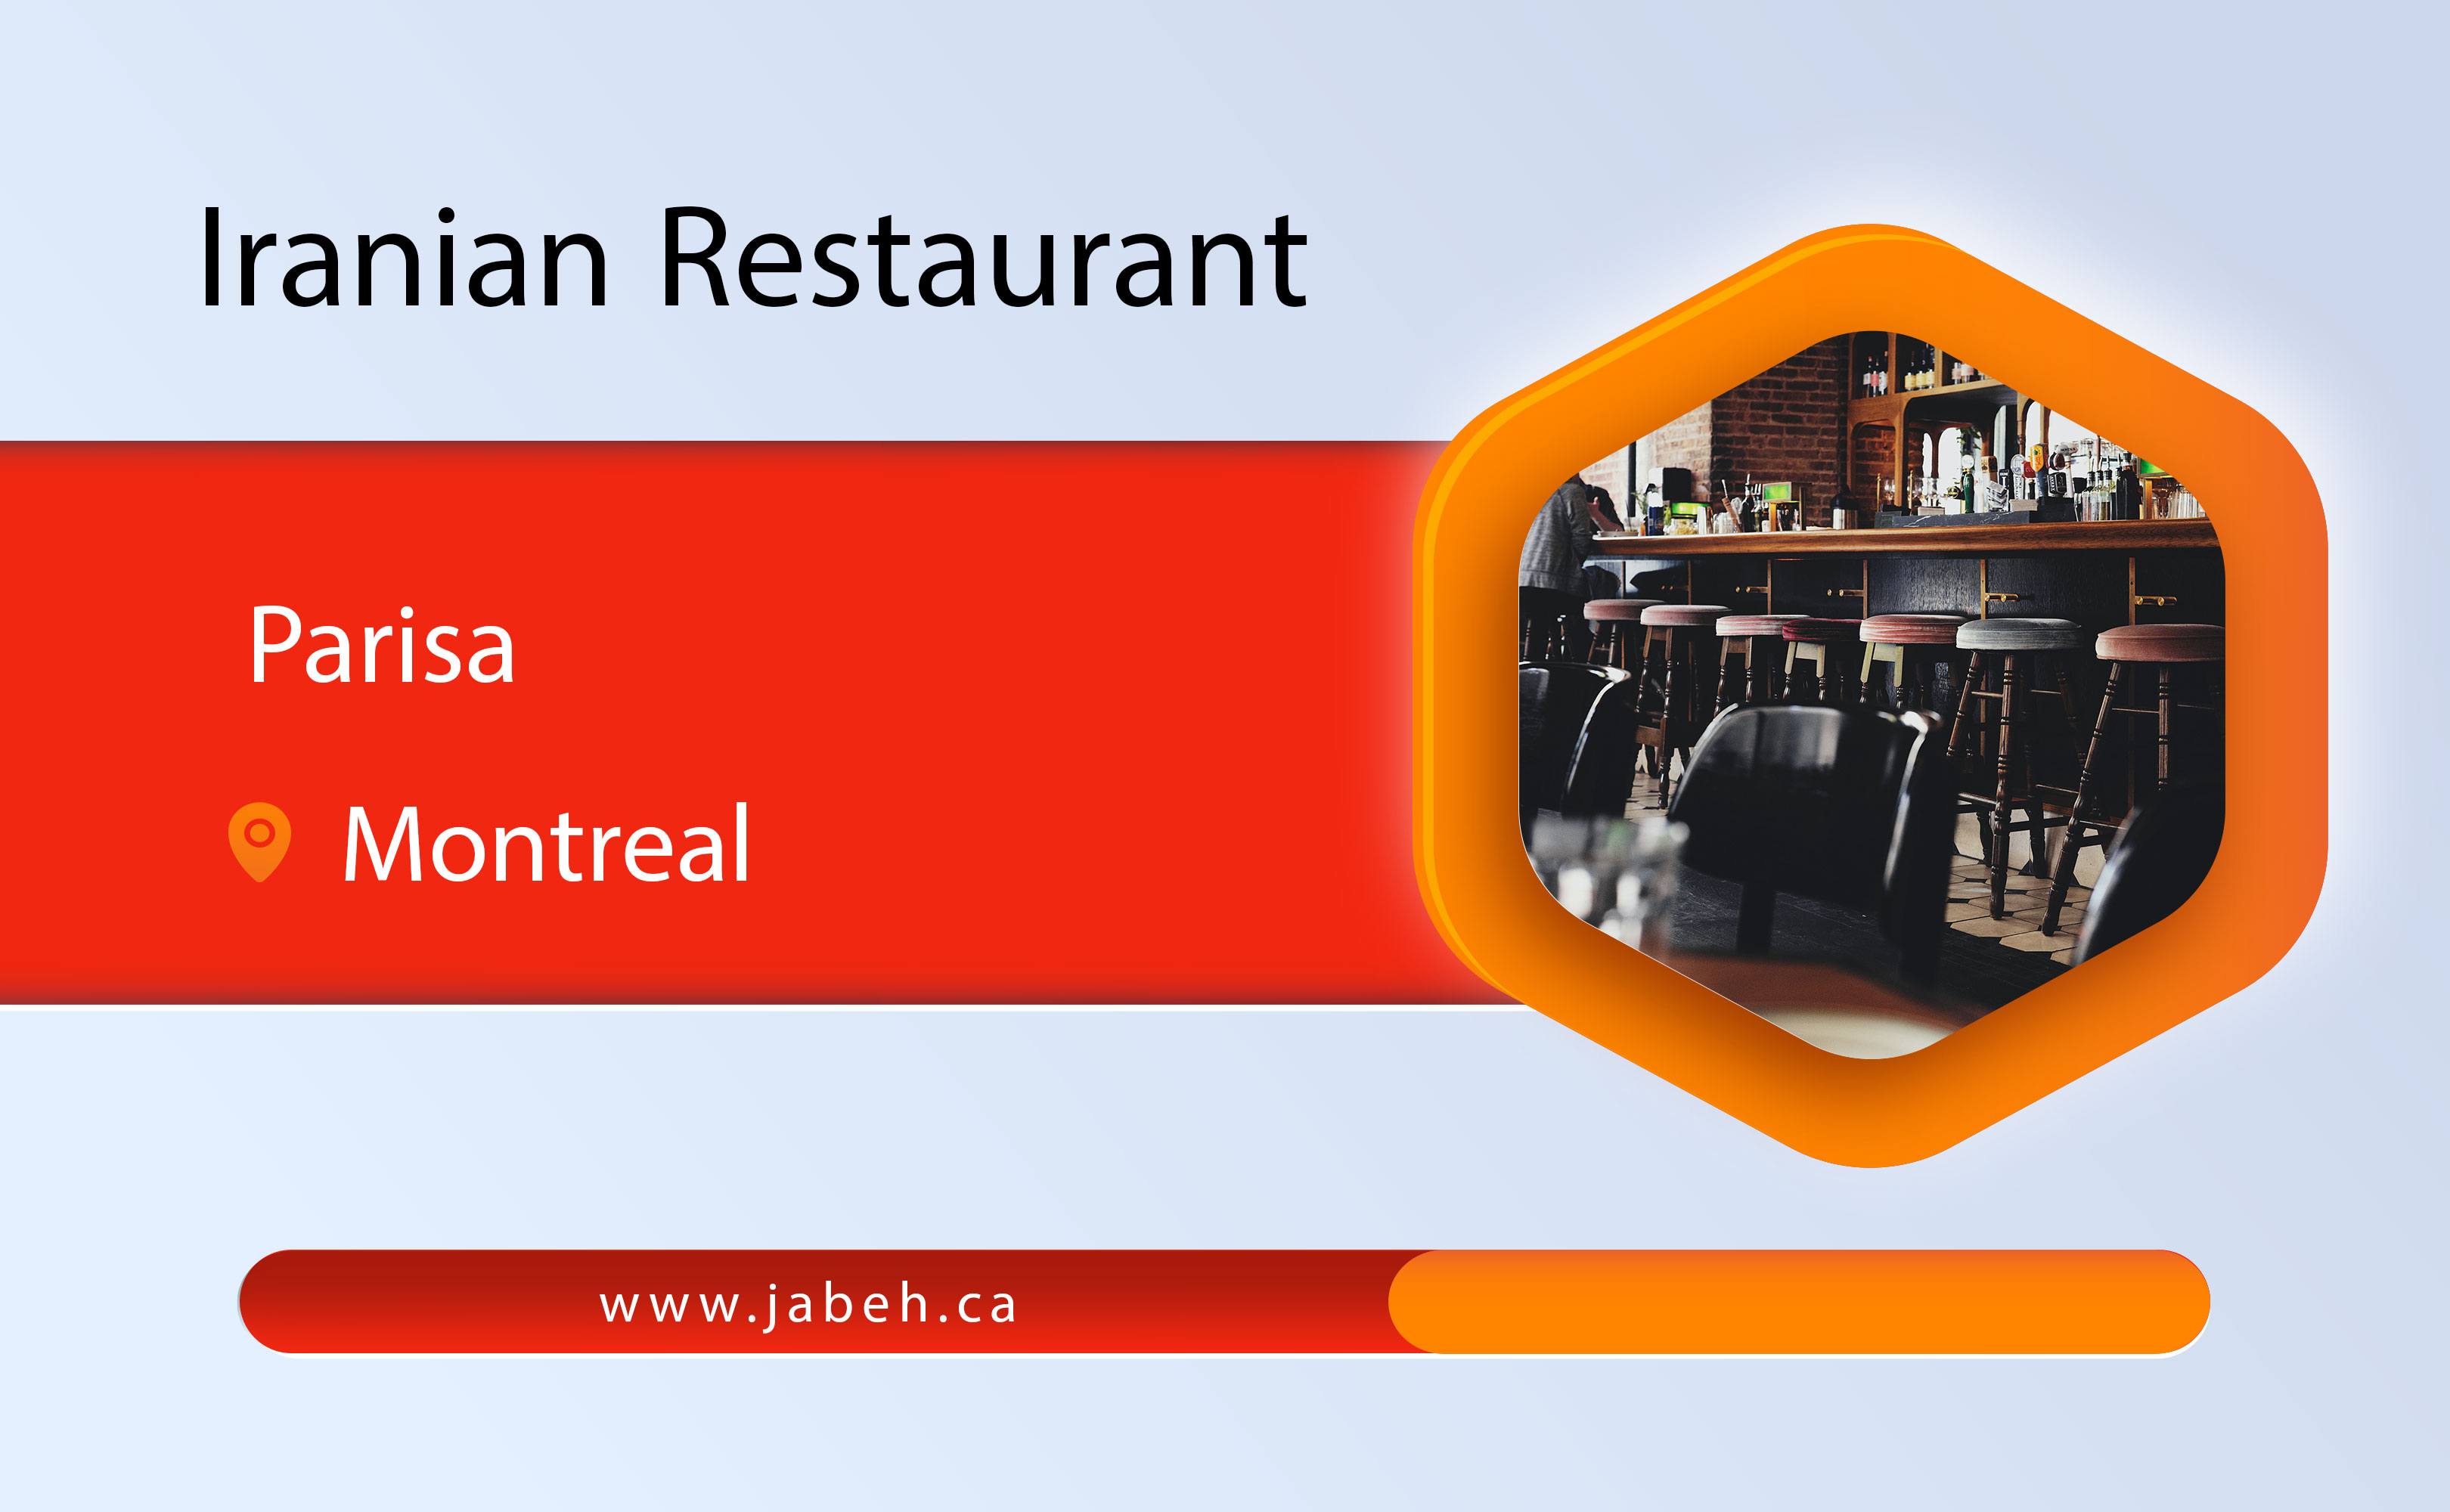 Parisa Iranian Restaurant in Montreal